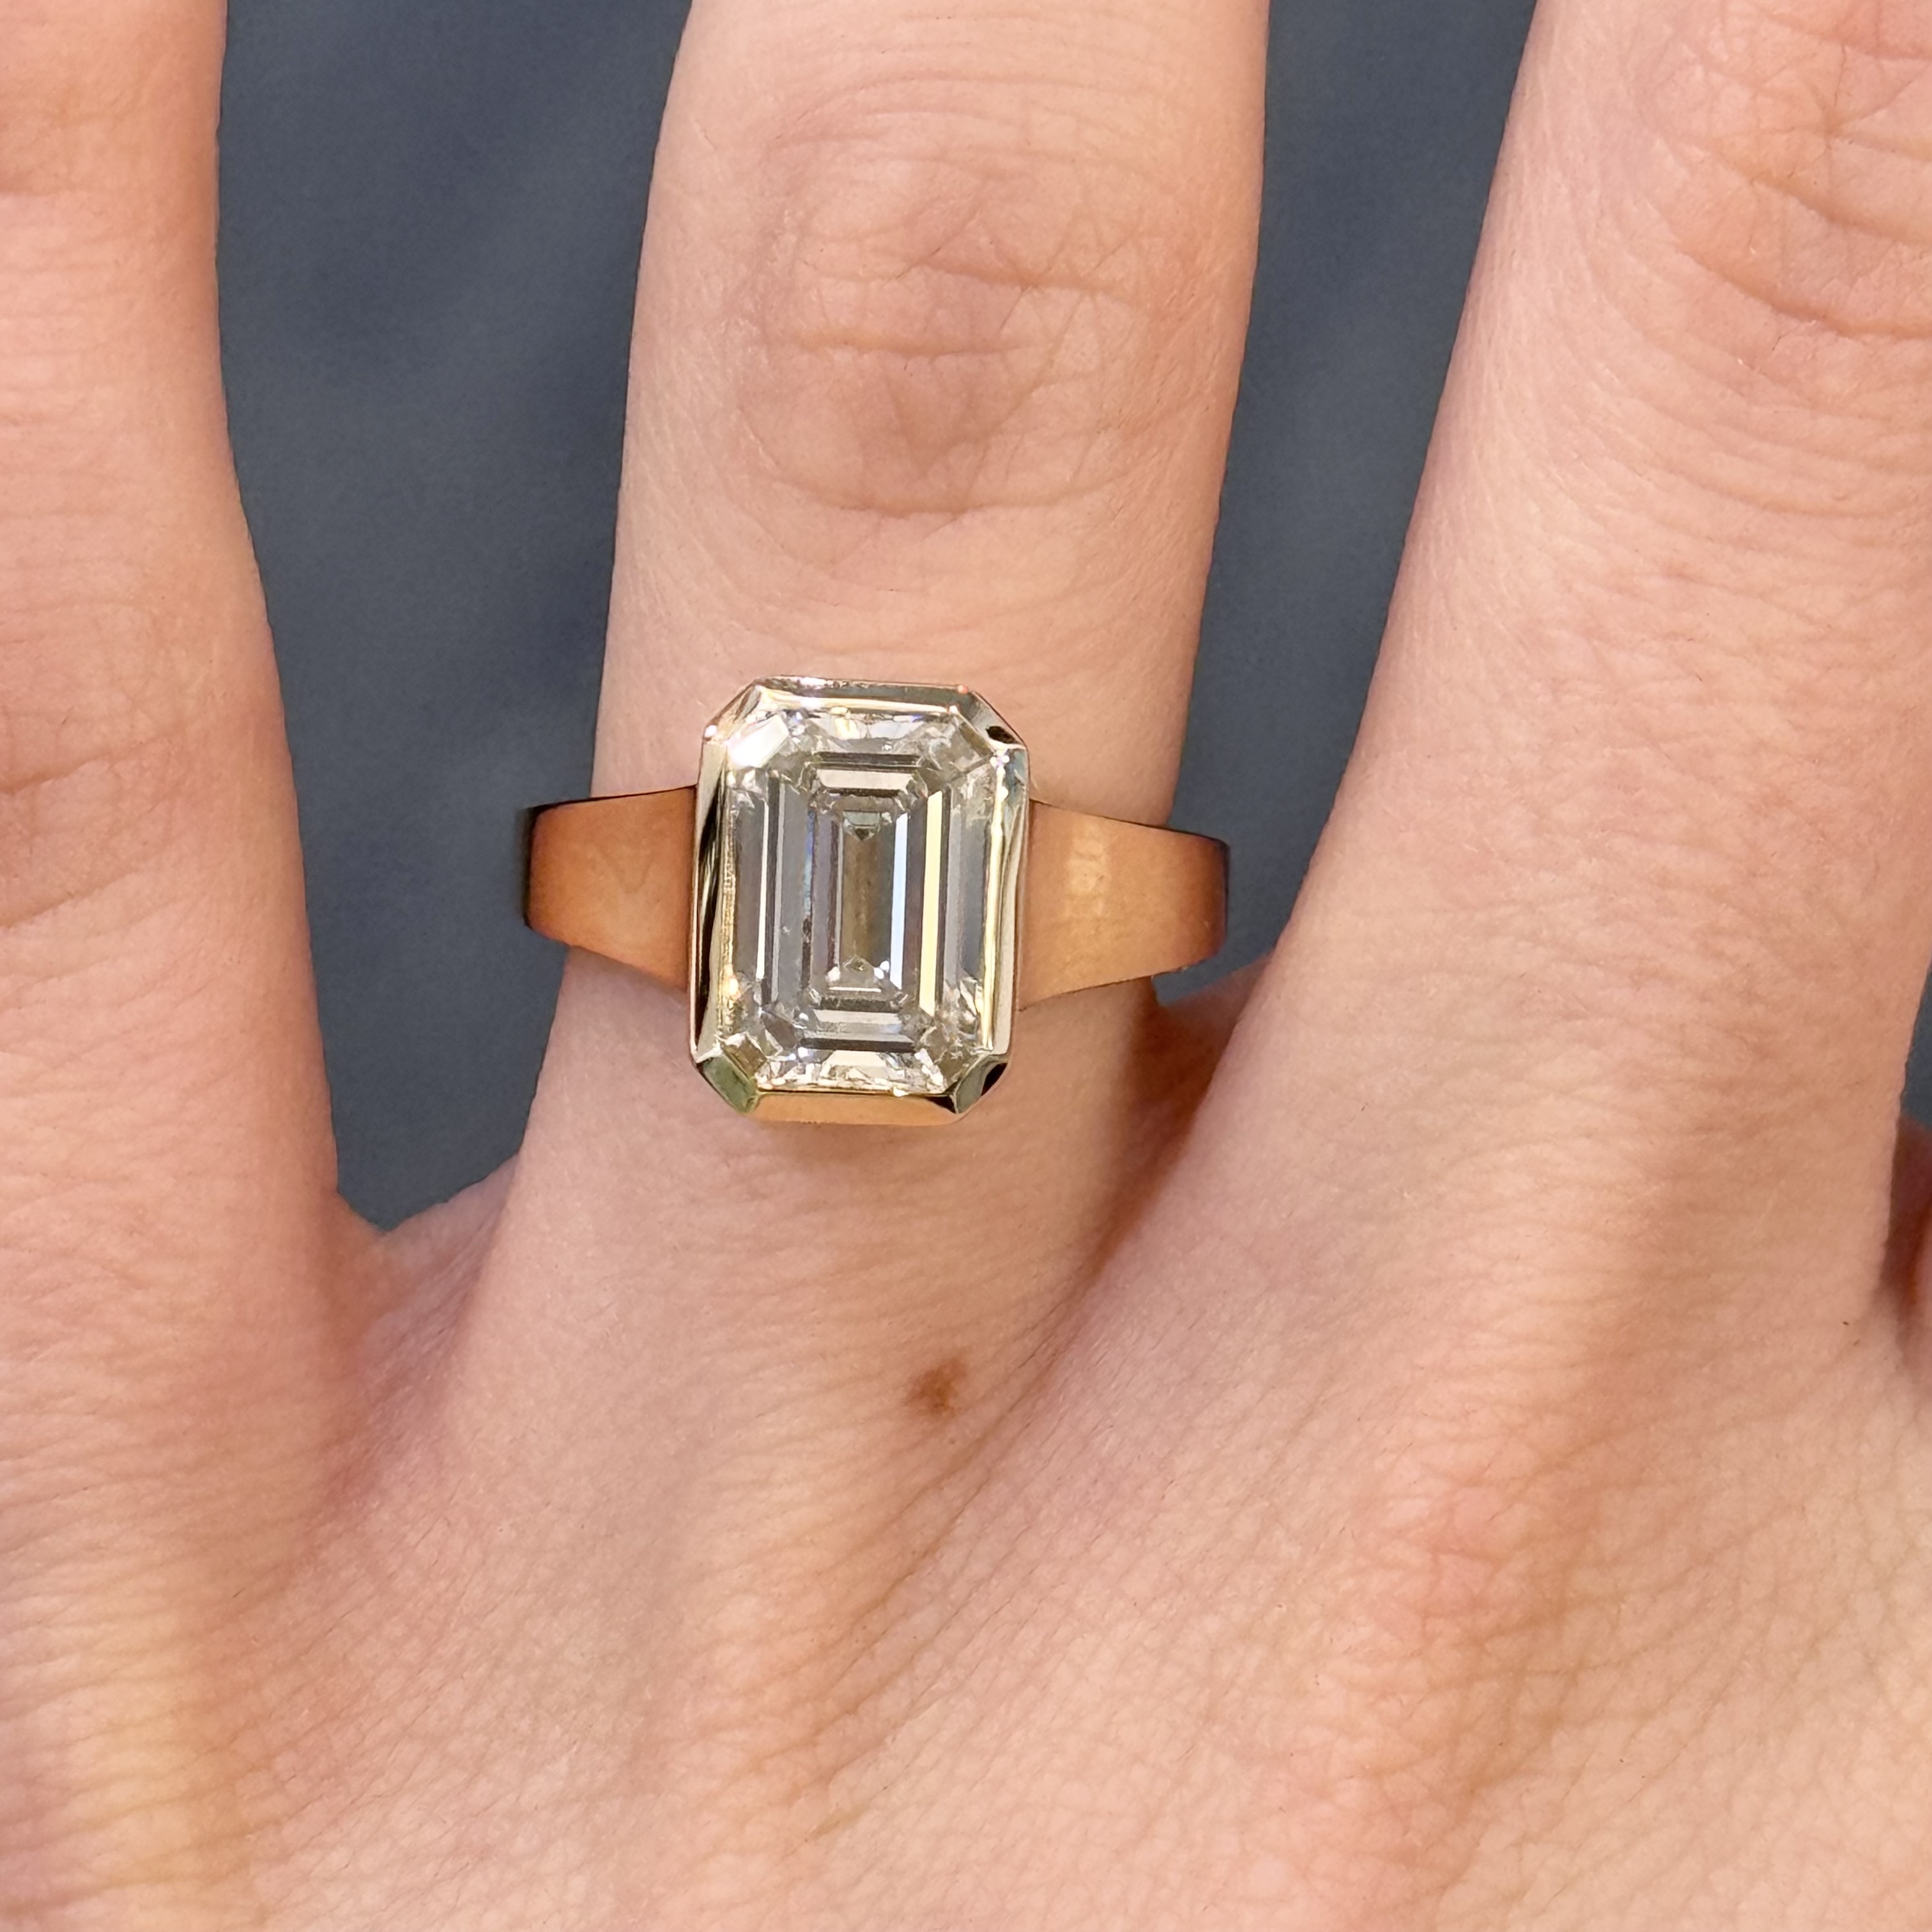 4.52 D VS2 Emerald "Reece" Engagement Ring Image 2 Forever Diamonds New York, NY